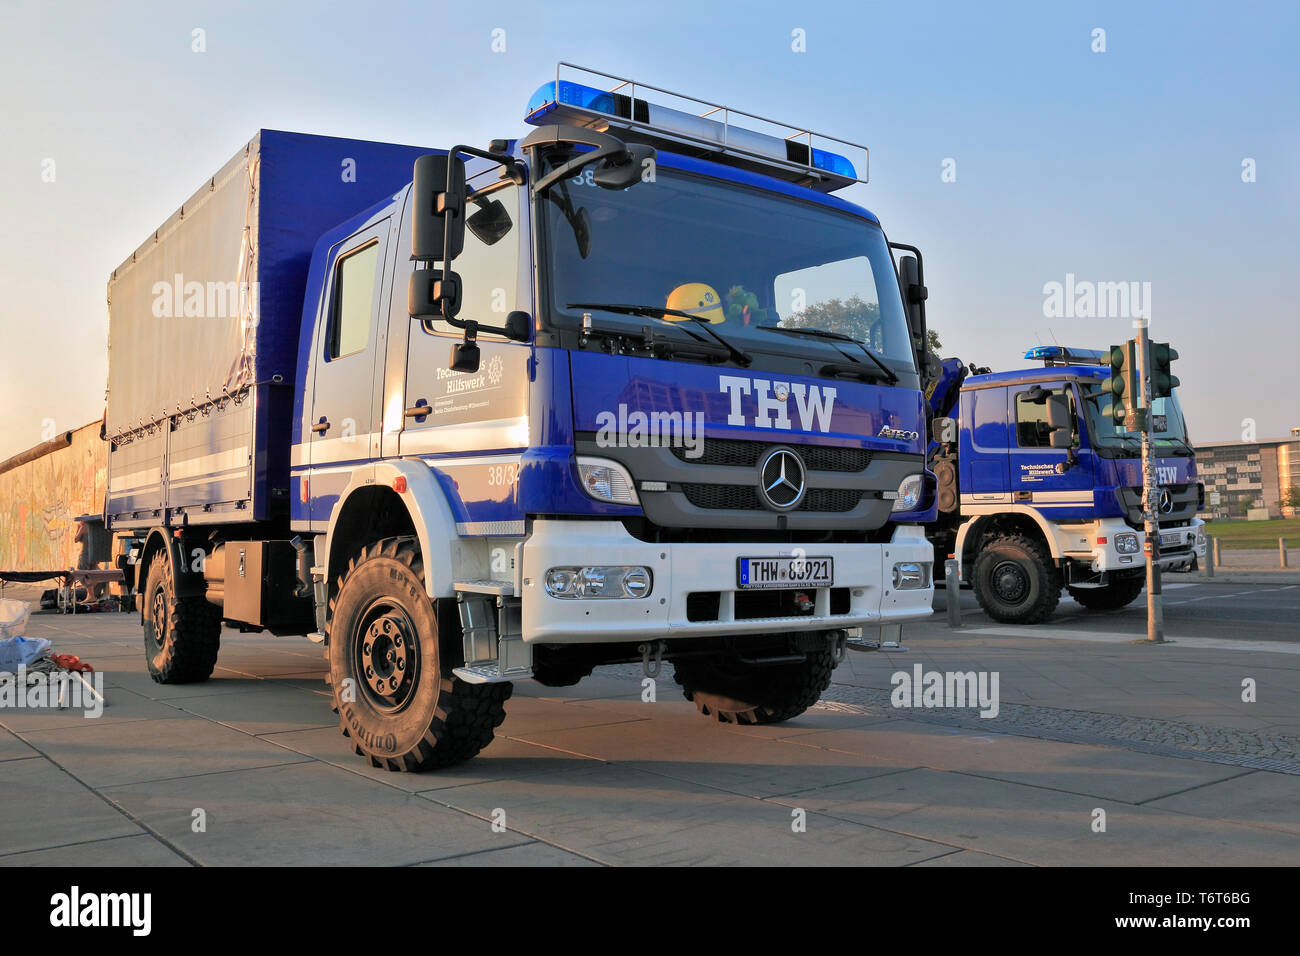 THW, Technisches Hilfswerk, German civil Protection organisation, trucks during disaster contol exercise. Stock Photo